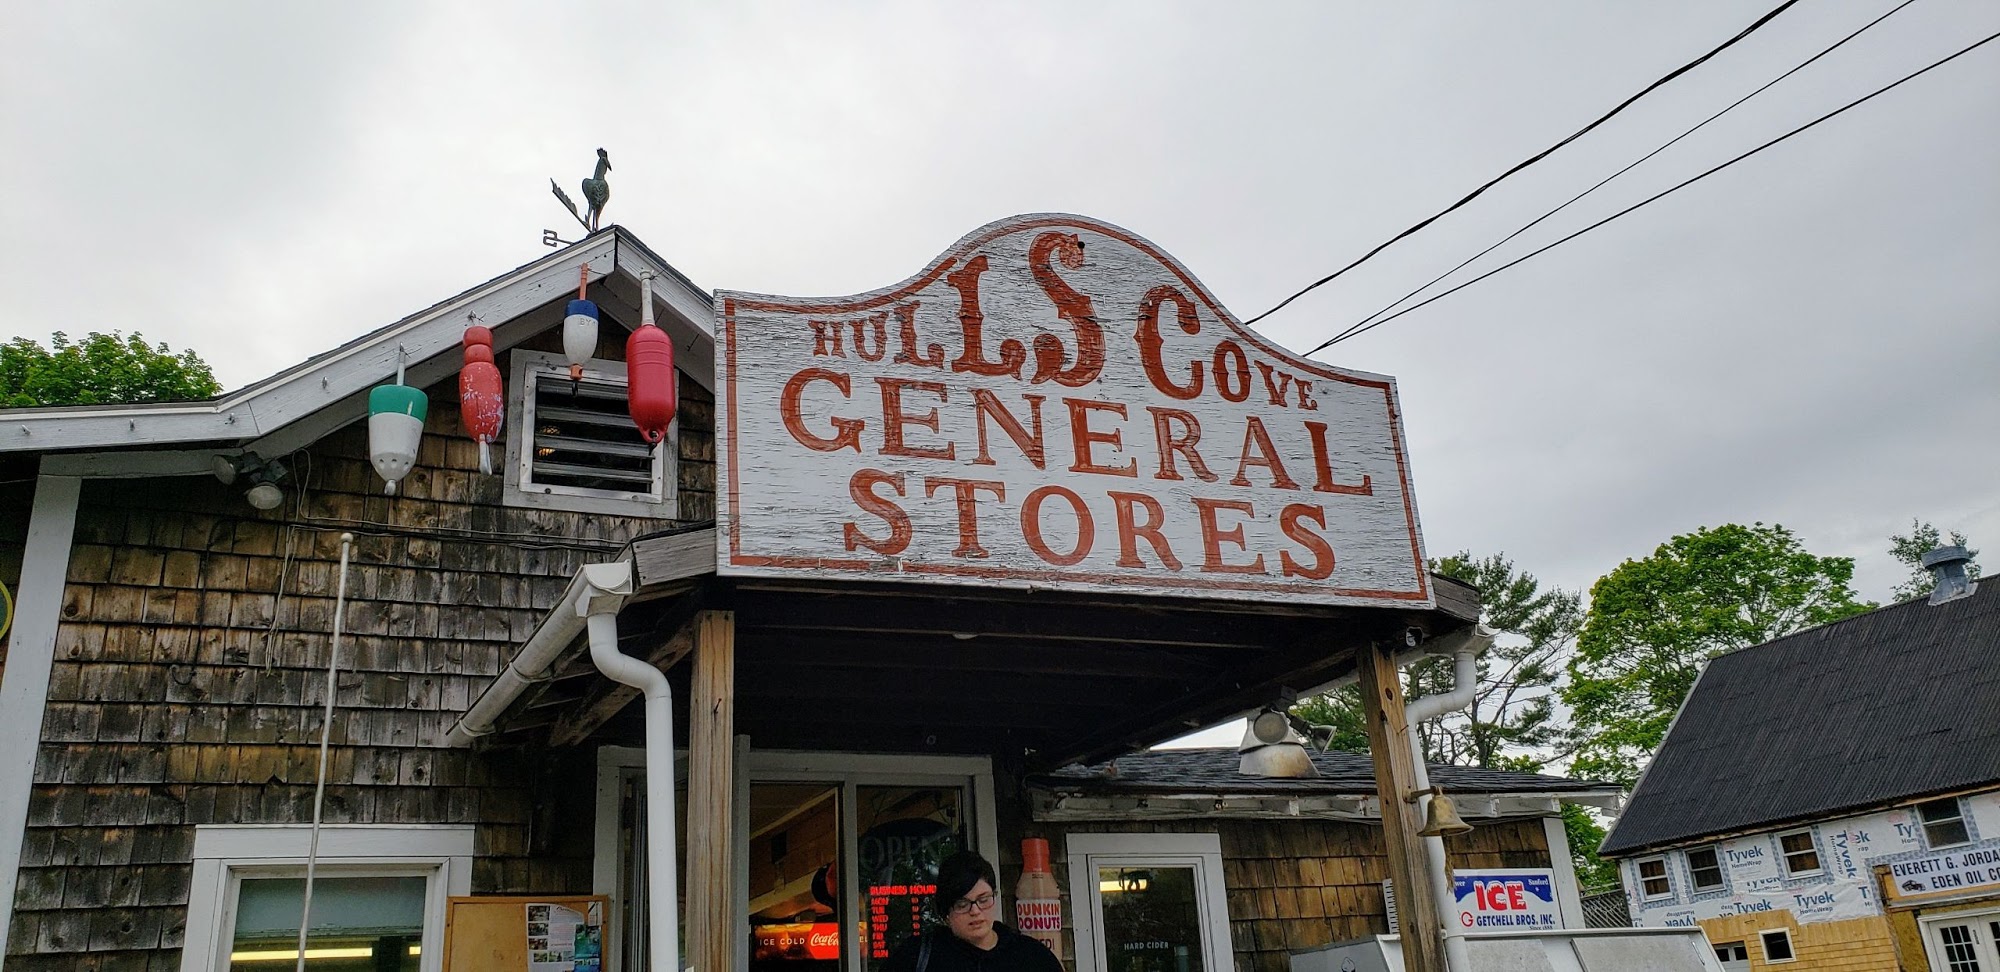 Hulls Cove General Stores & Deli